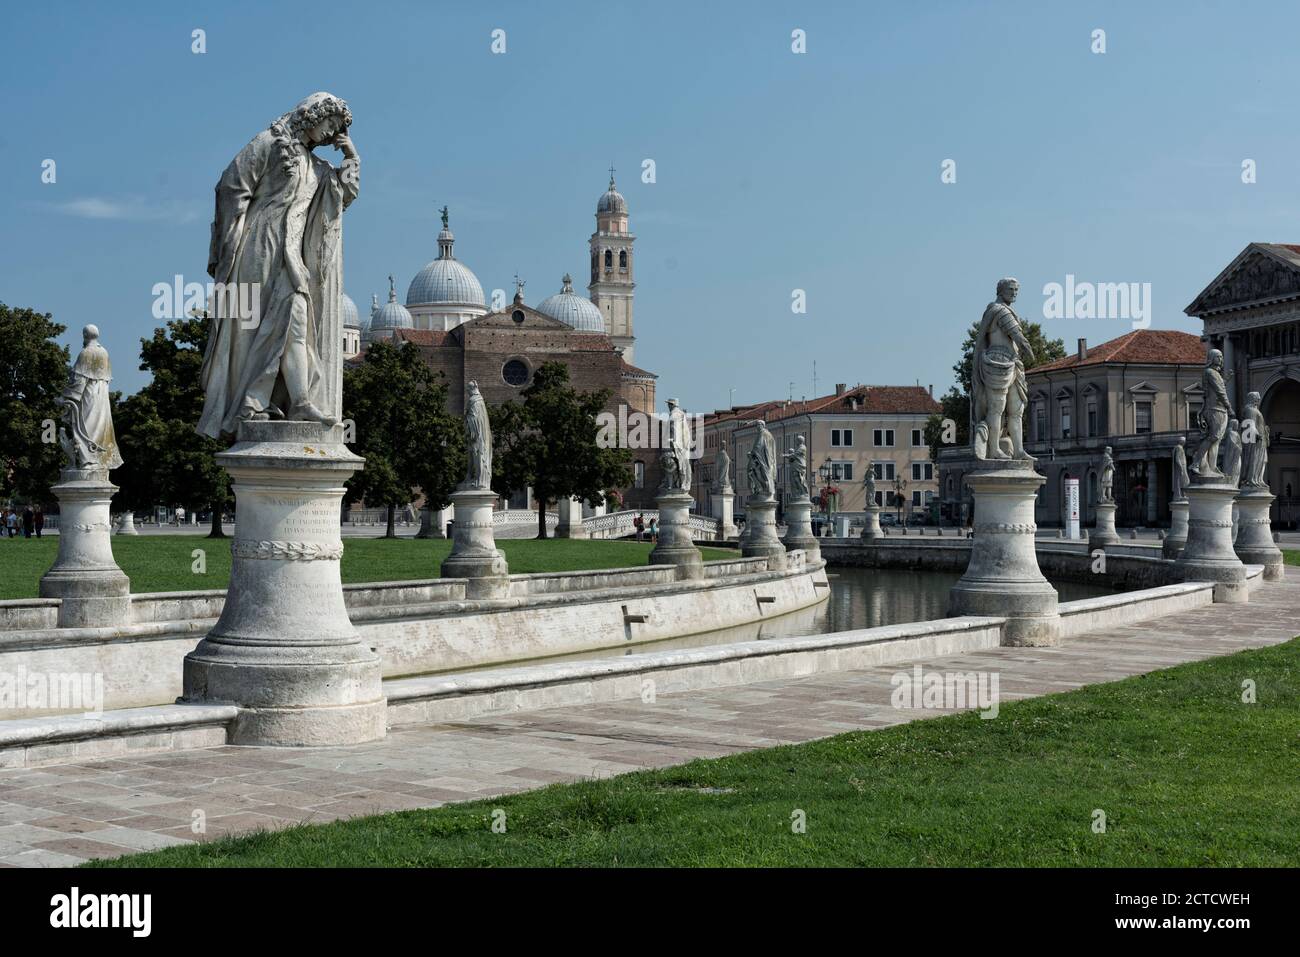 Prato della Valle, its canal and many impressive classical statues on their pedestals. The Basilica Santa Giustina in the background, Padova, Veneto, Italy. Stock Photo